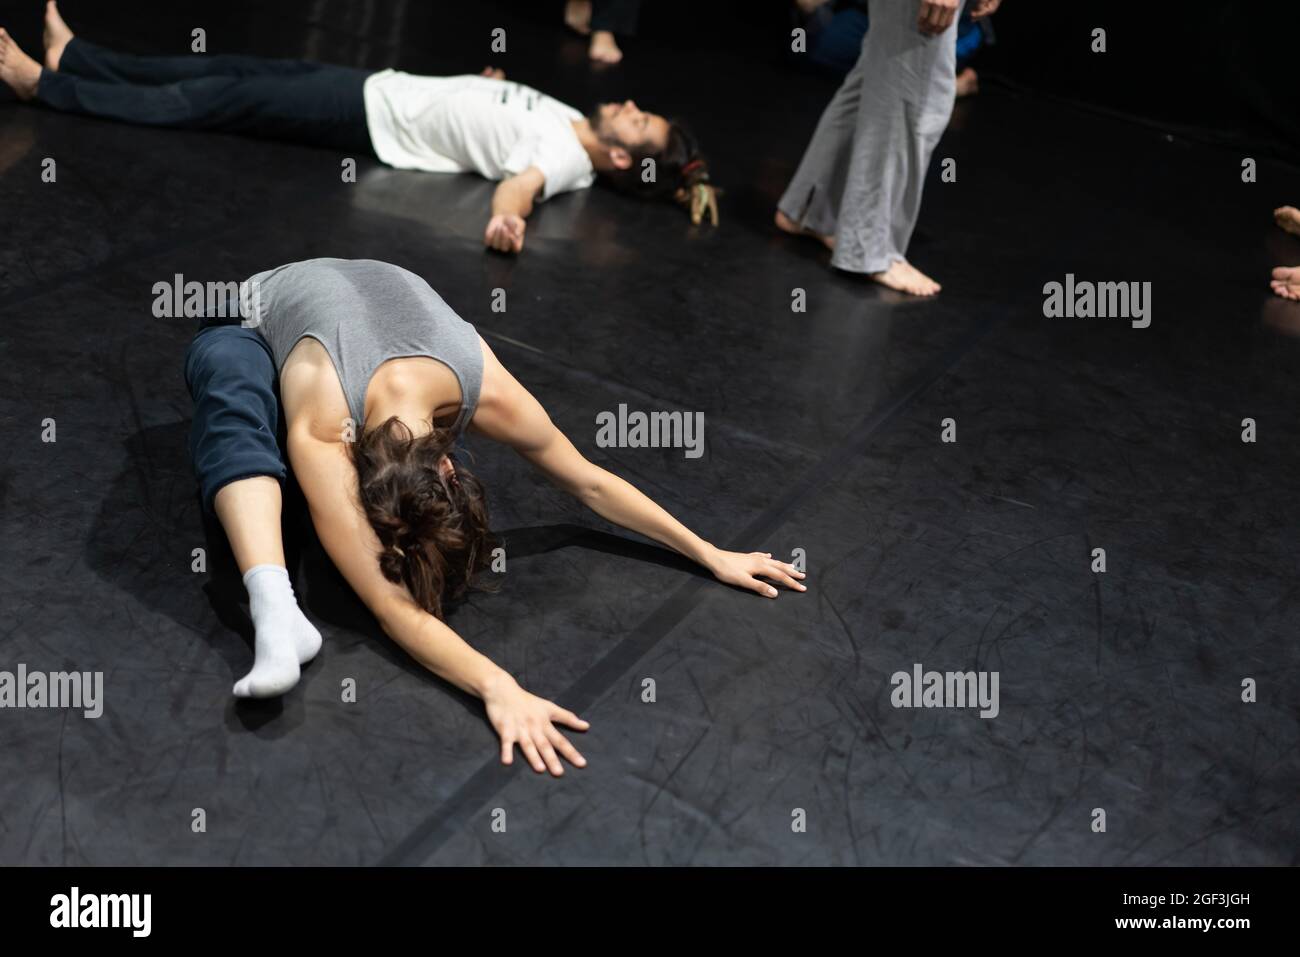 solo dancer move in contemporary improvisation performance Stock Photo